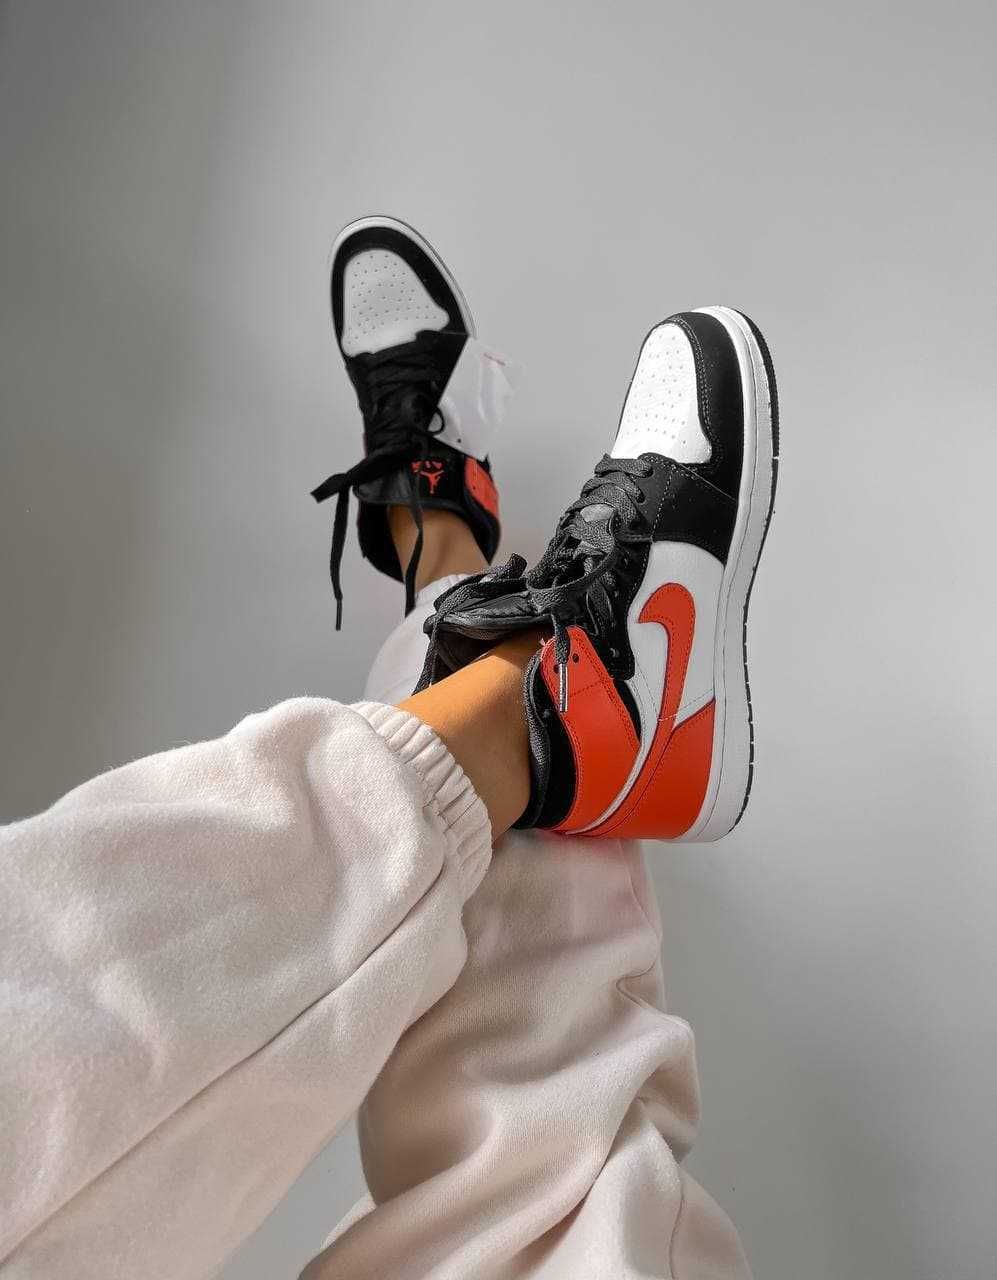 Nike Air Jordan 1 Retro  Orange Black